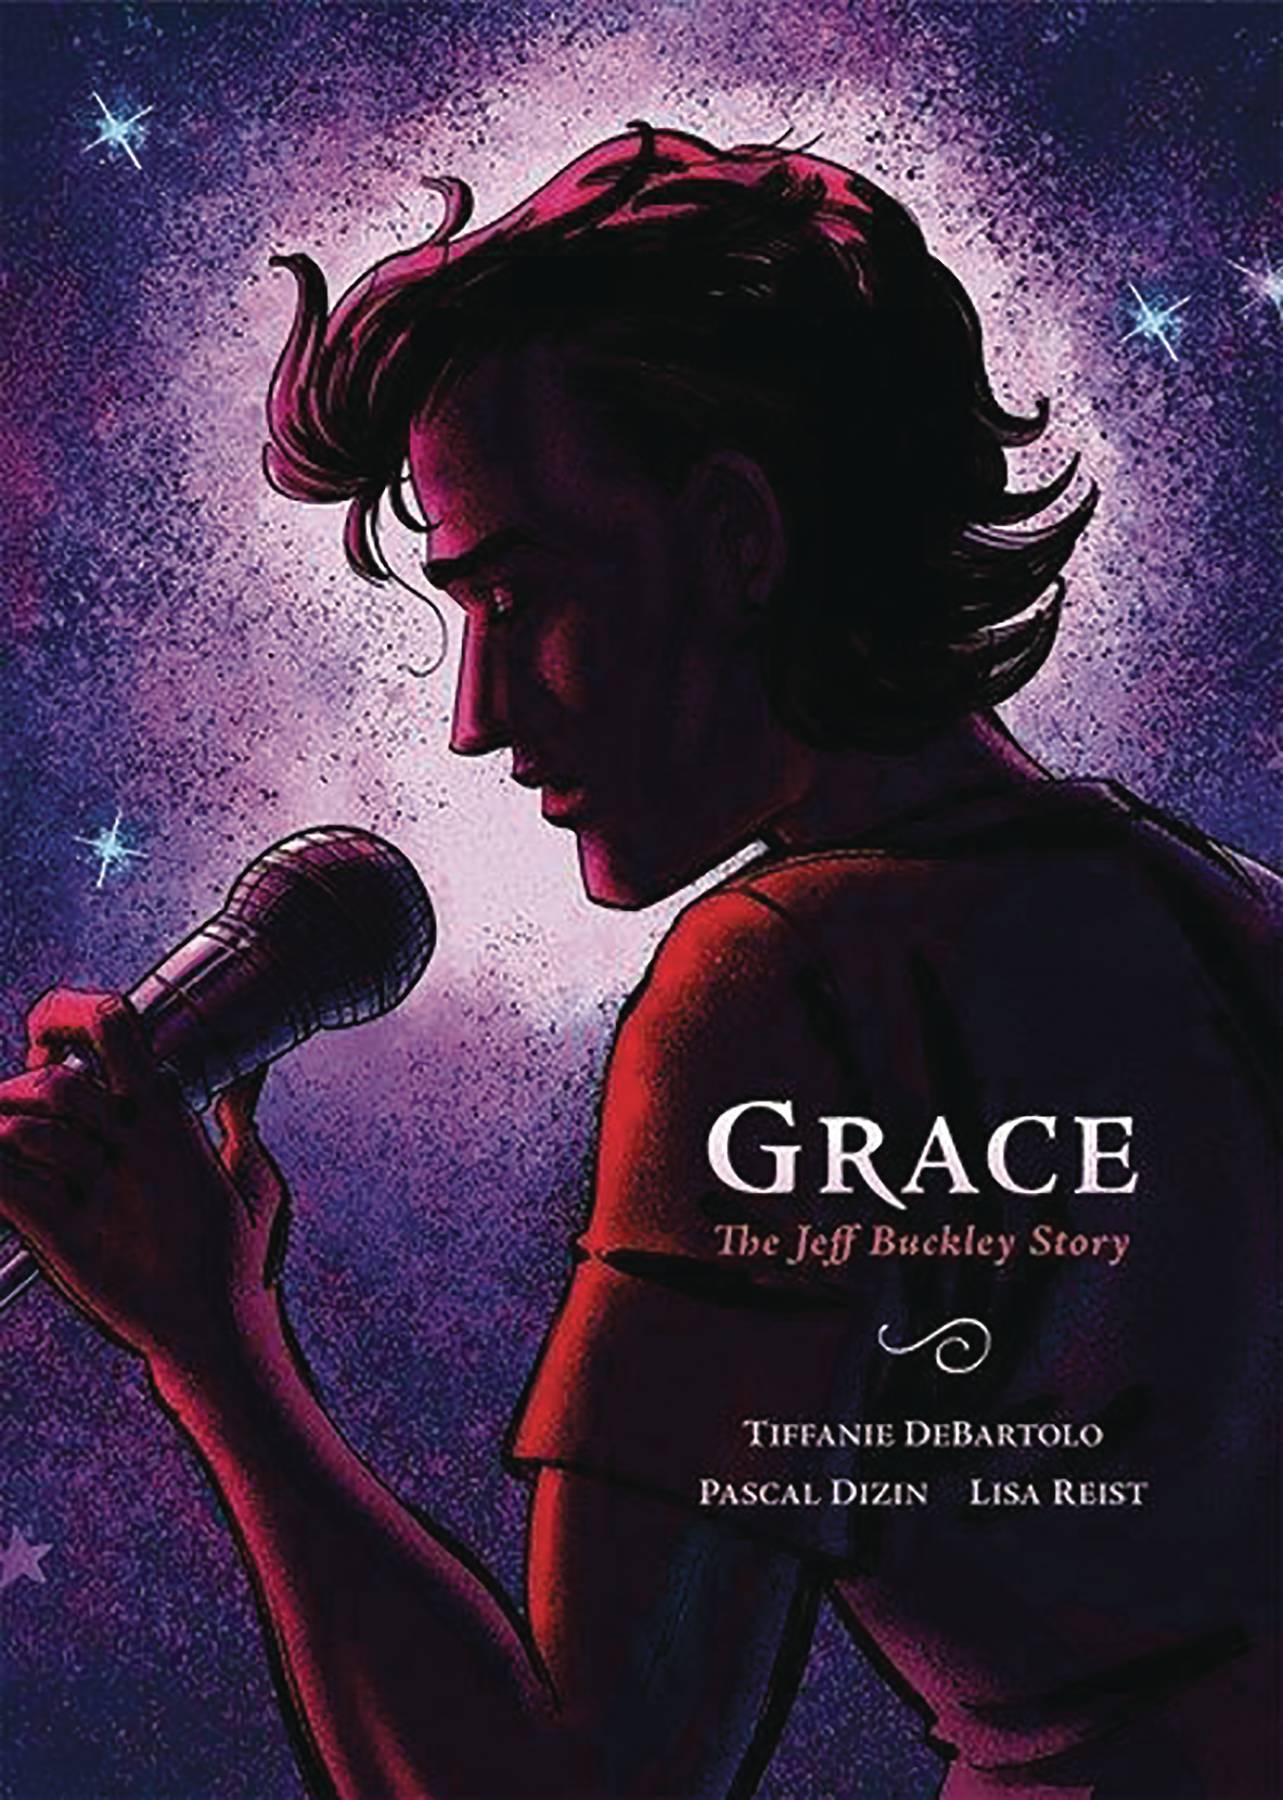 Grace Based On Jeff Buckley Story Hardcover Graphic Novel